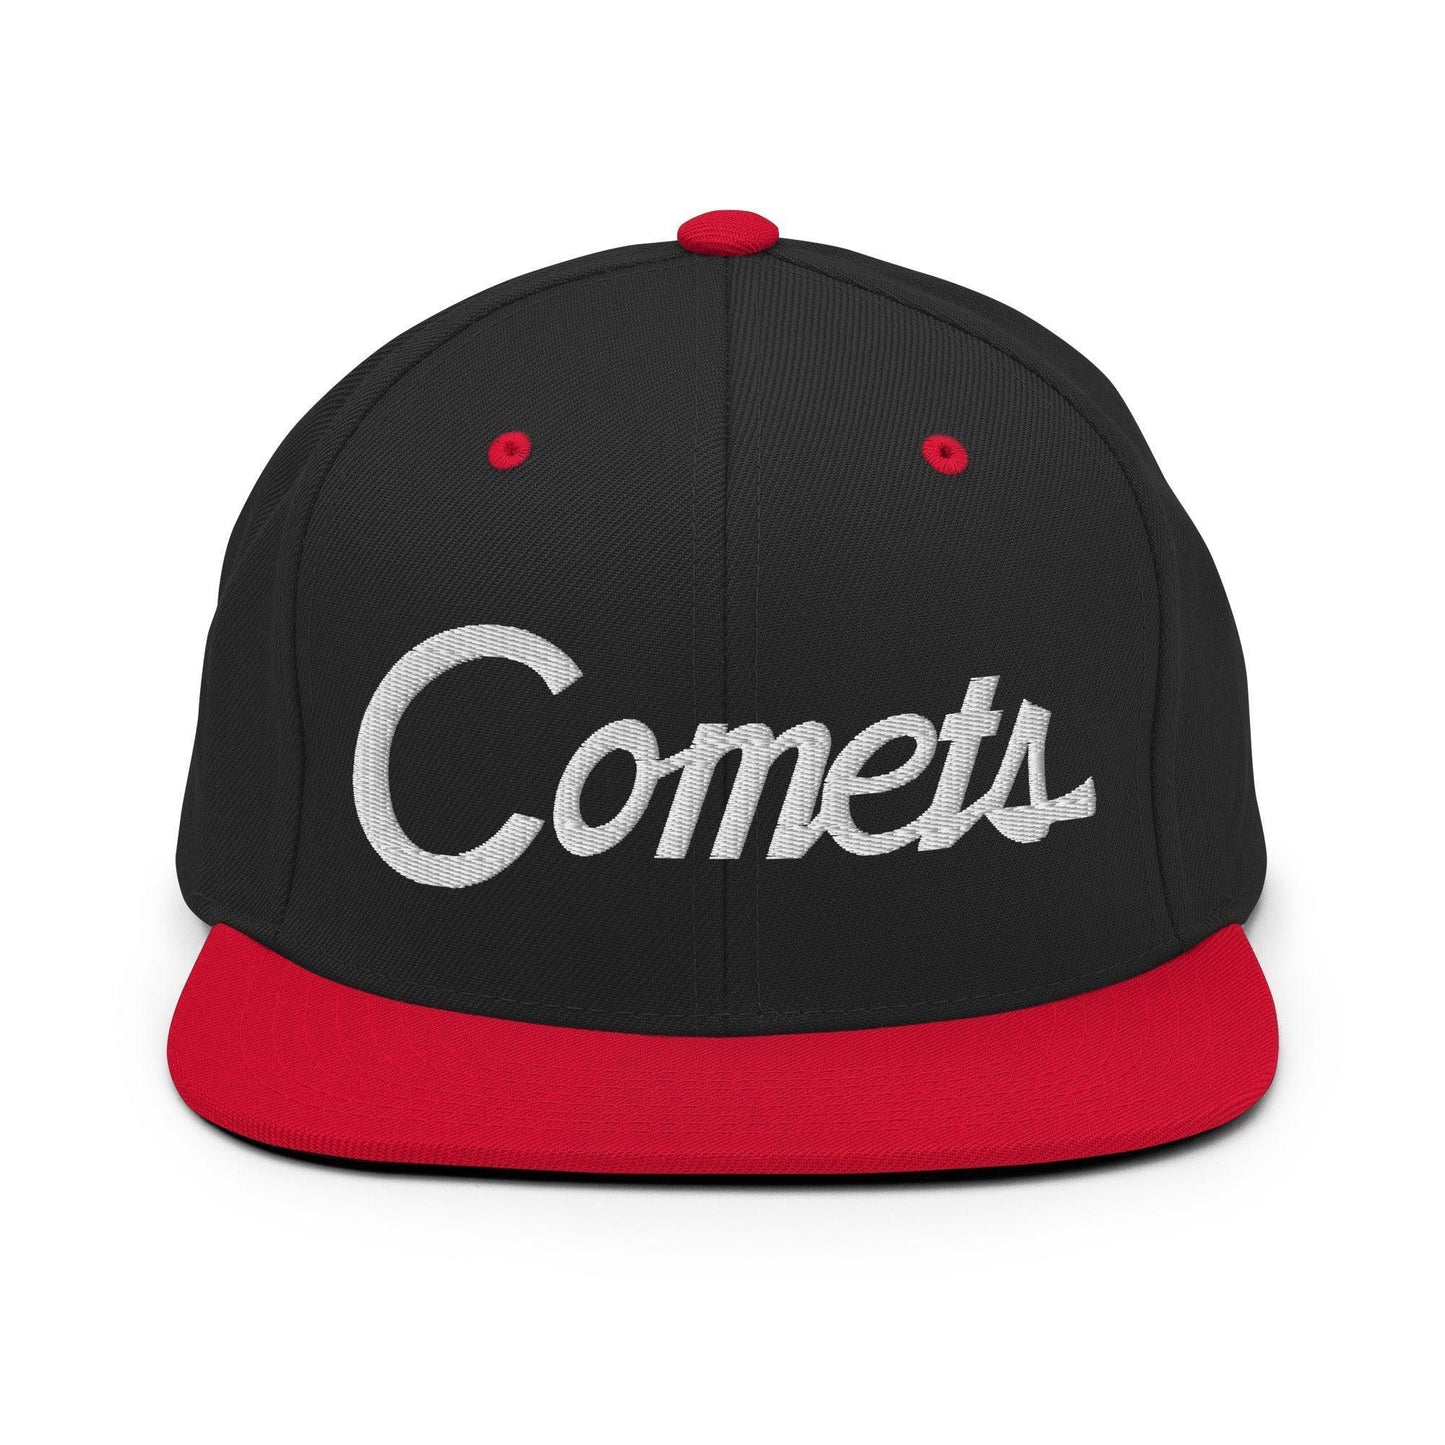 Comets School Mascot Script Snapback Hat Black Red